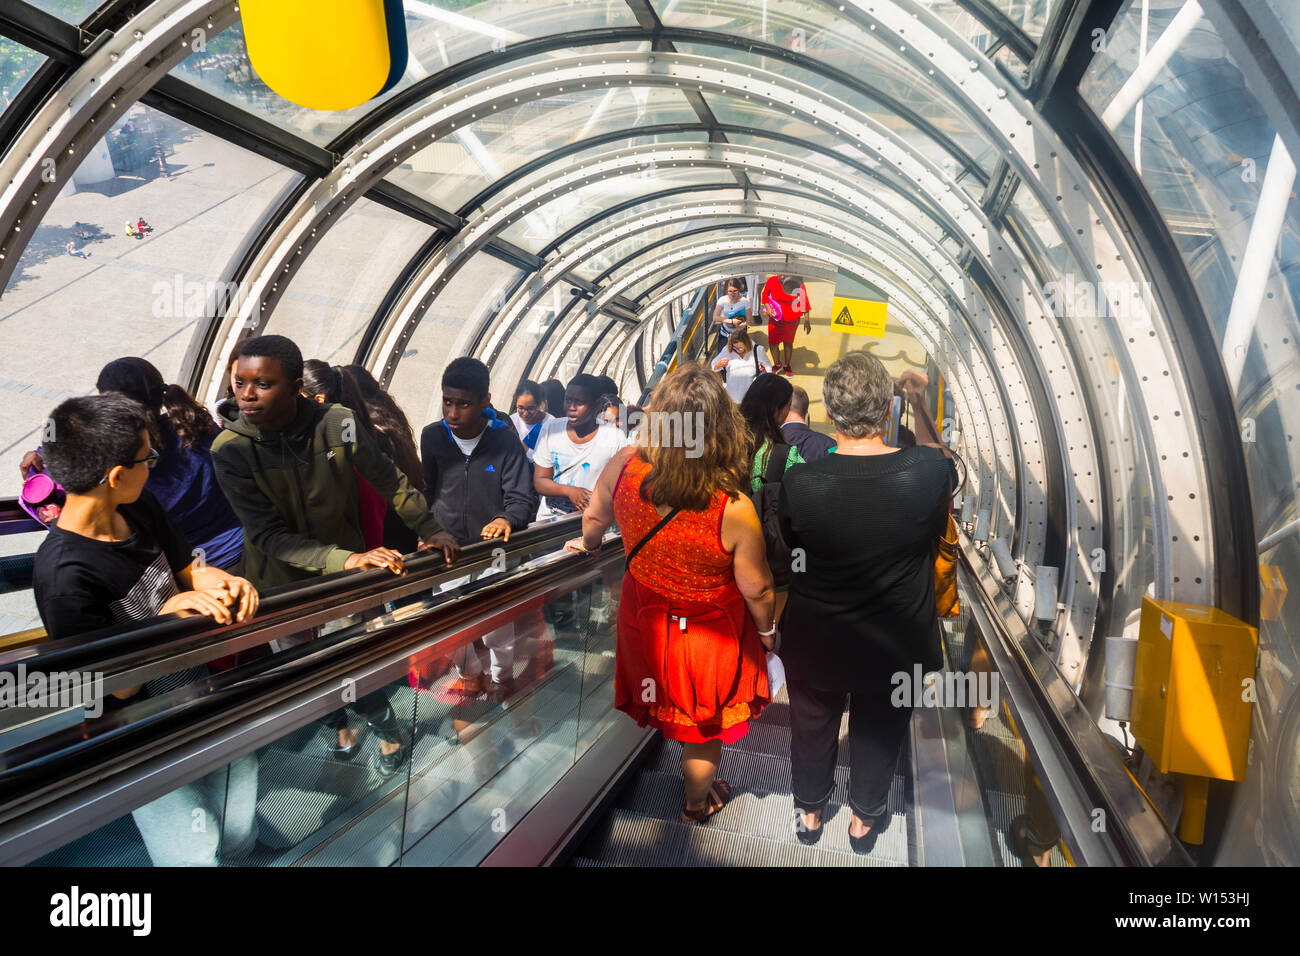 Tourists using the escalators in the Centre Pompidou art gallery, Paris, France. Stock Photo